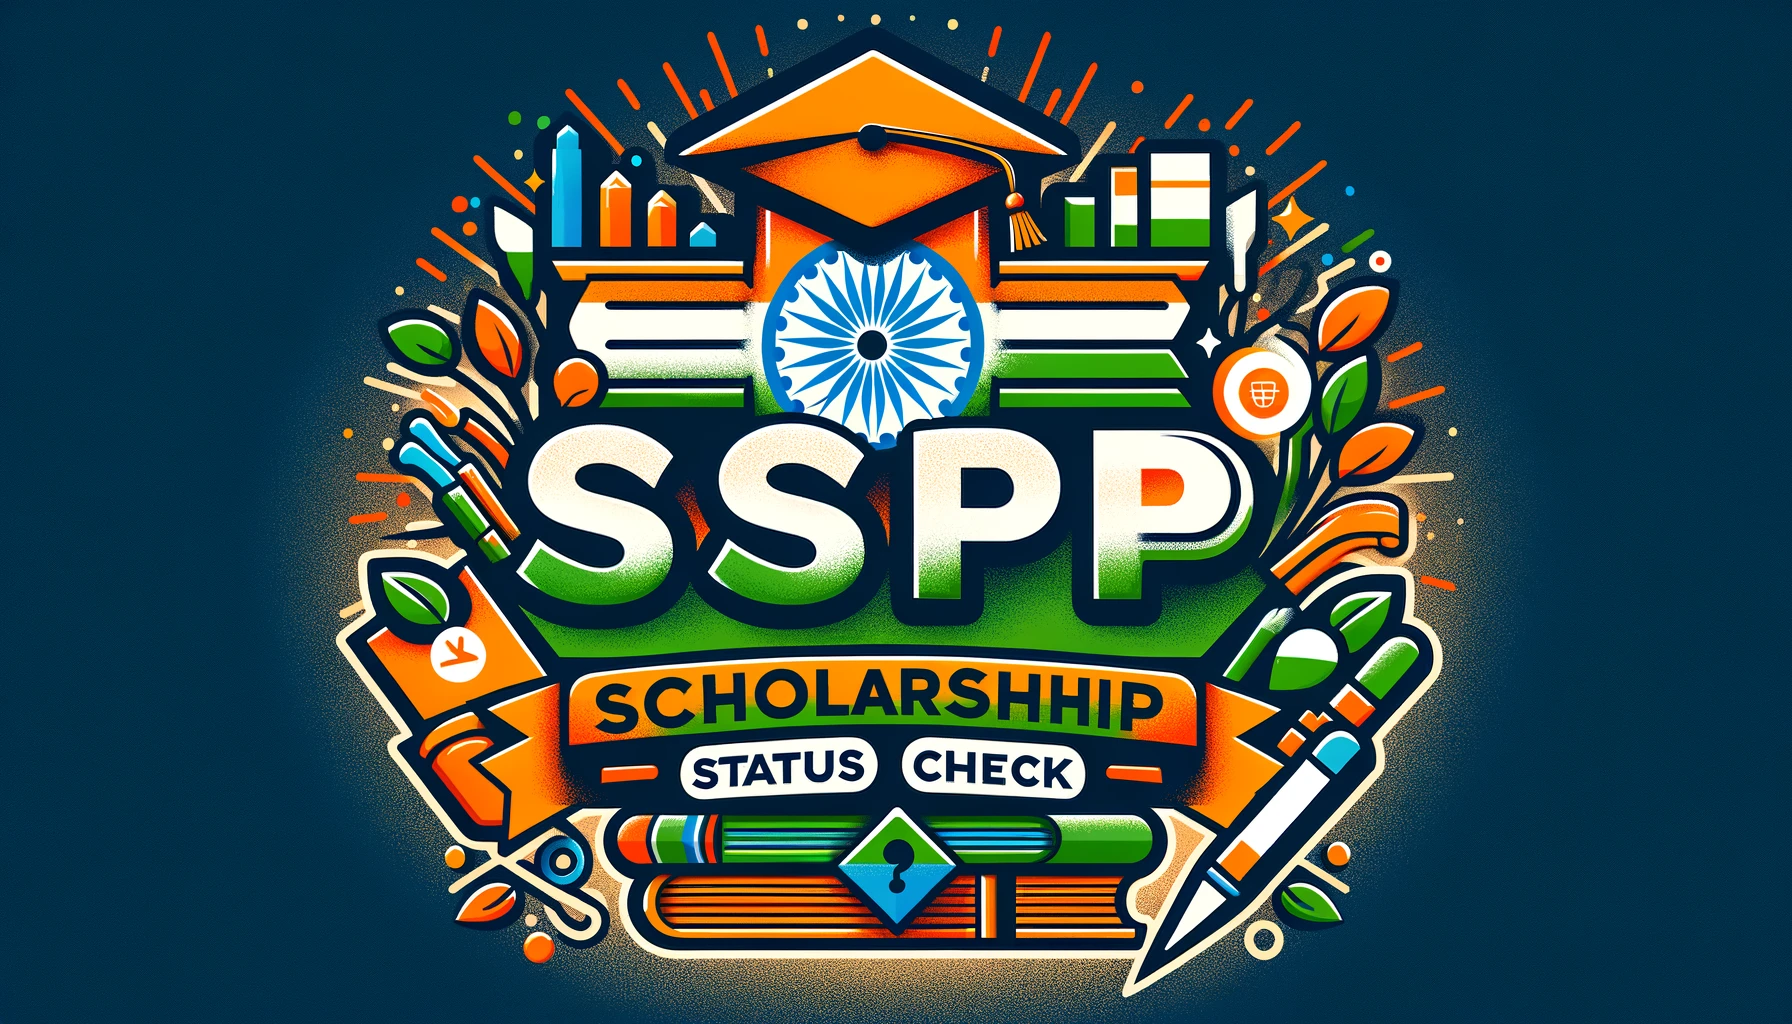 SSP Scholarship Status Check